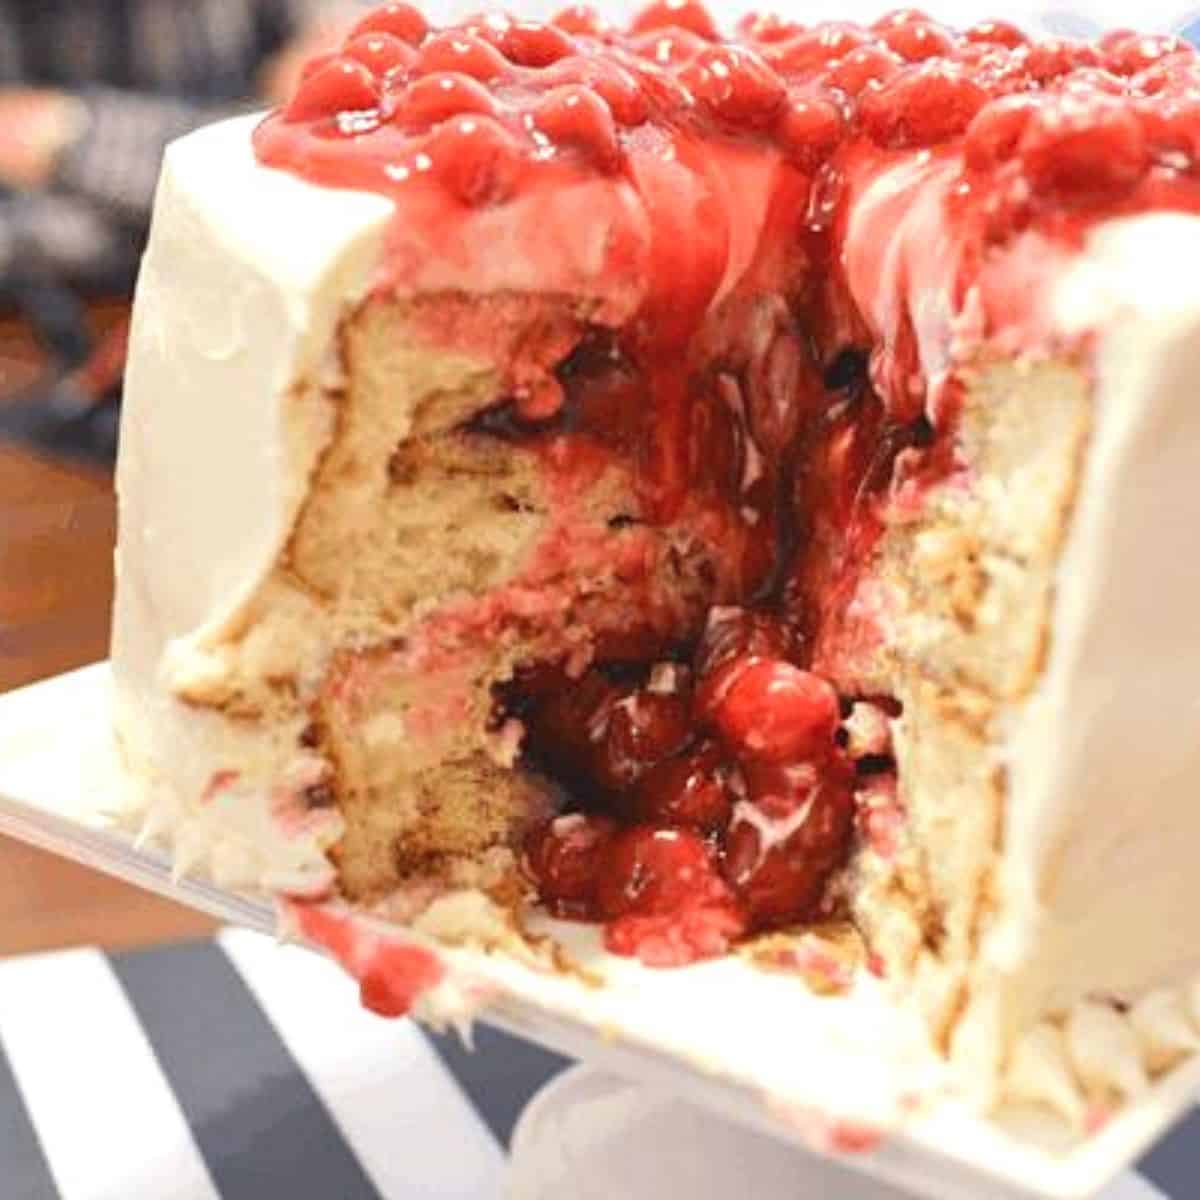 https://www.cupcakesandcutlery.com/wp-content/uploads/2020/09/pie-cake-featured-image.jpg